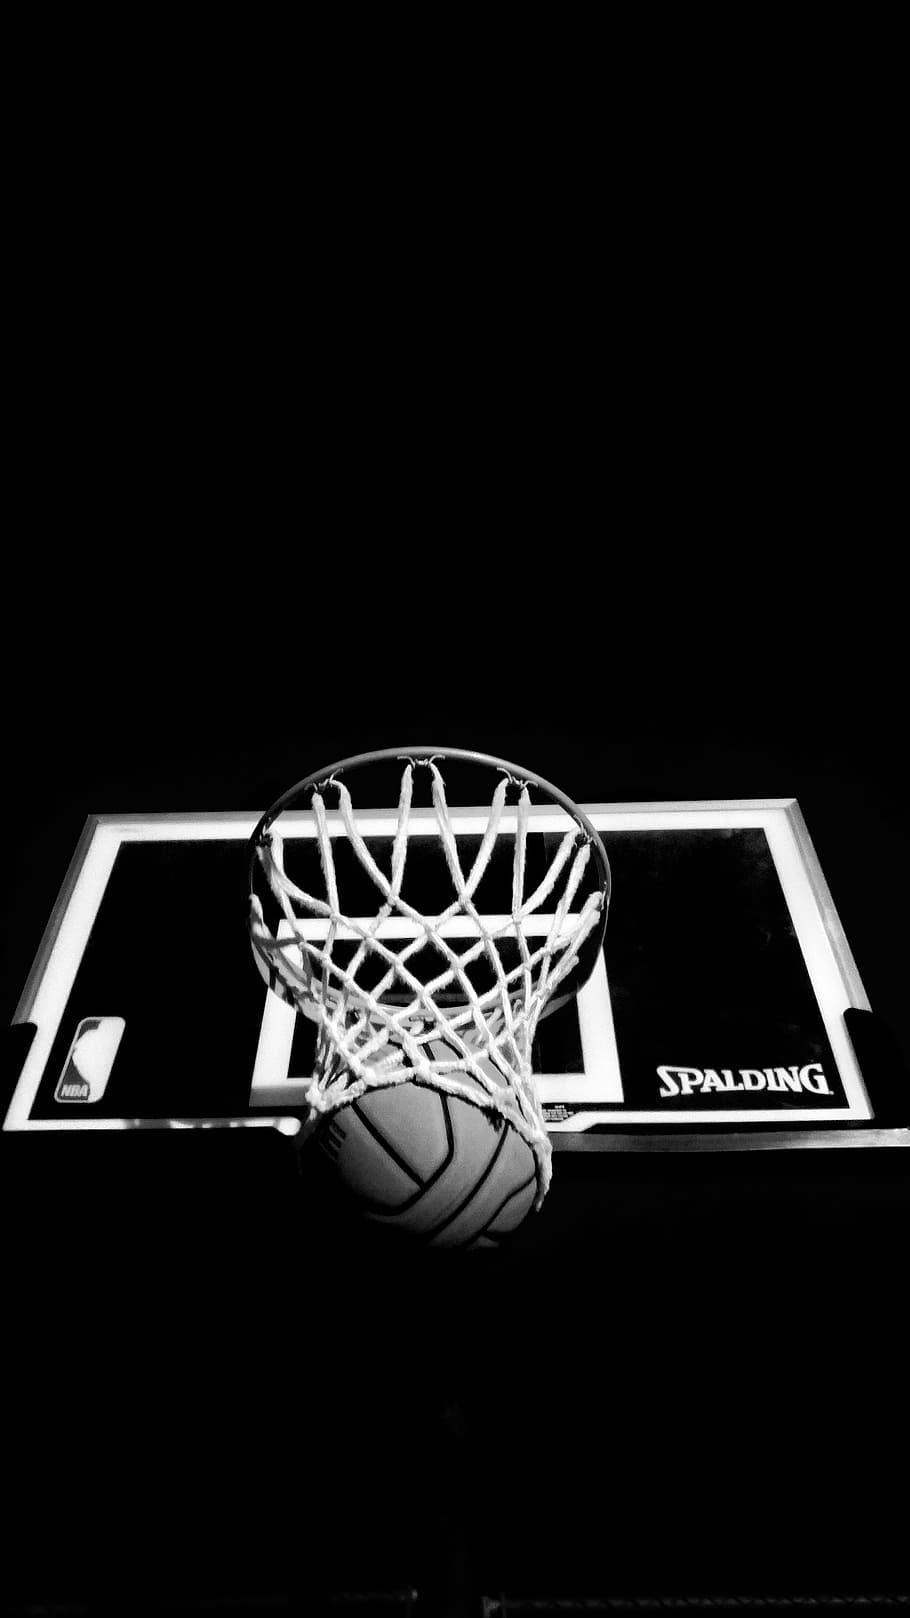 fotografi grayscale, ring bola basket spalding, bola, grayscale, photograpy, spalding, bola basket, sistem, gelap, cincin